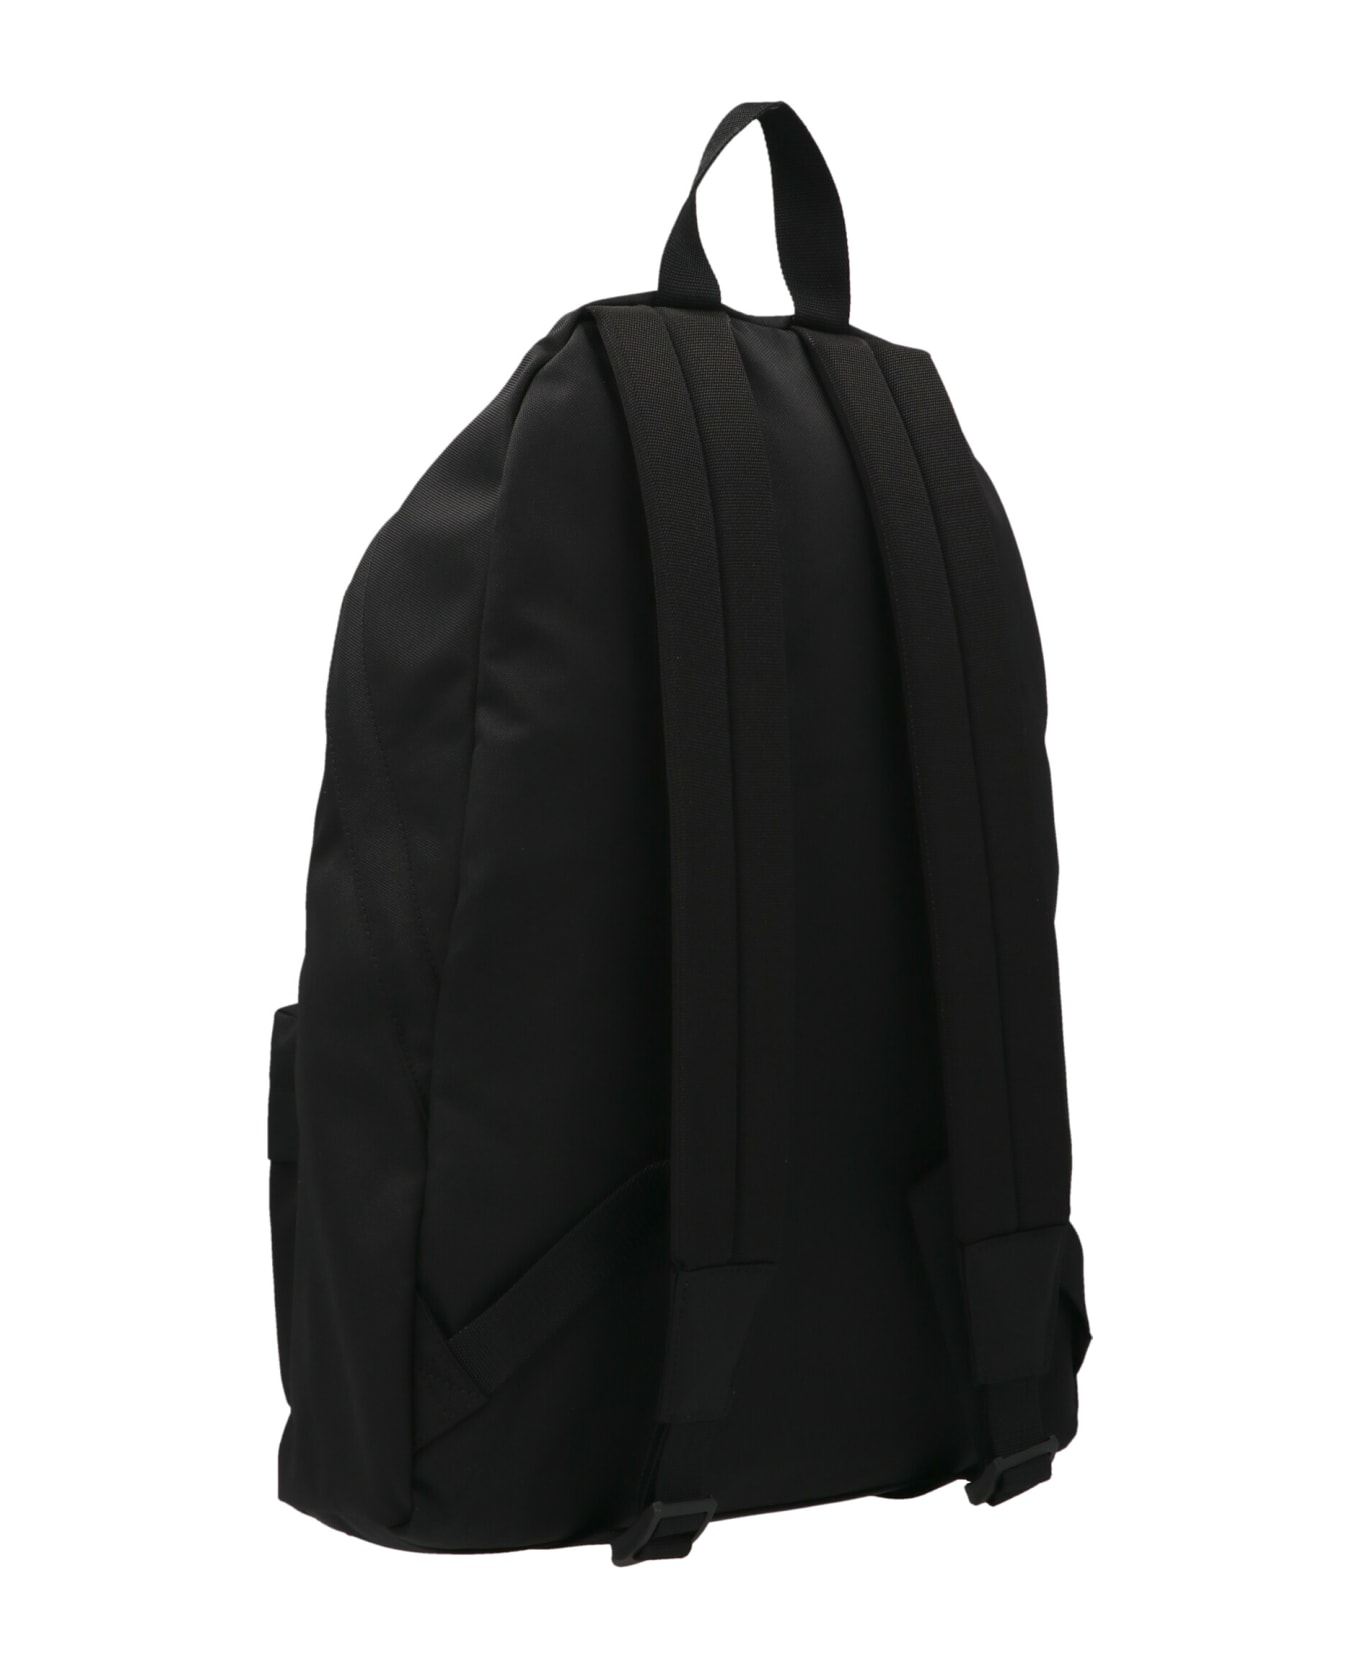 Balenciaga Backpack - Black